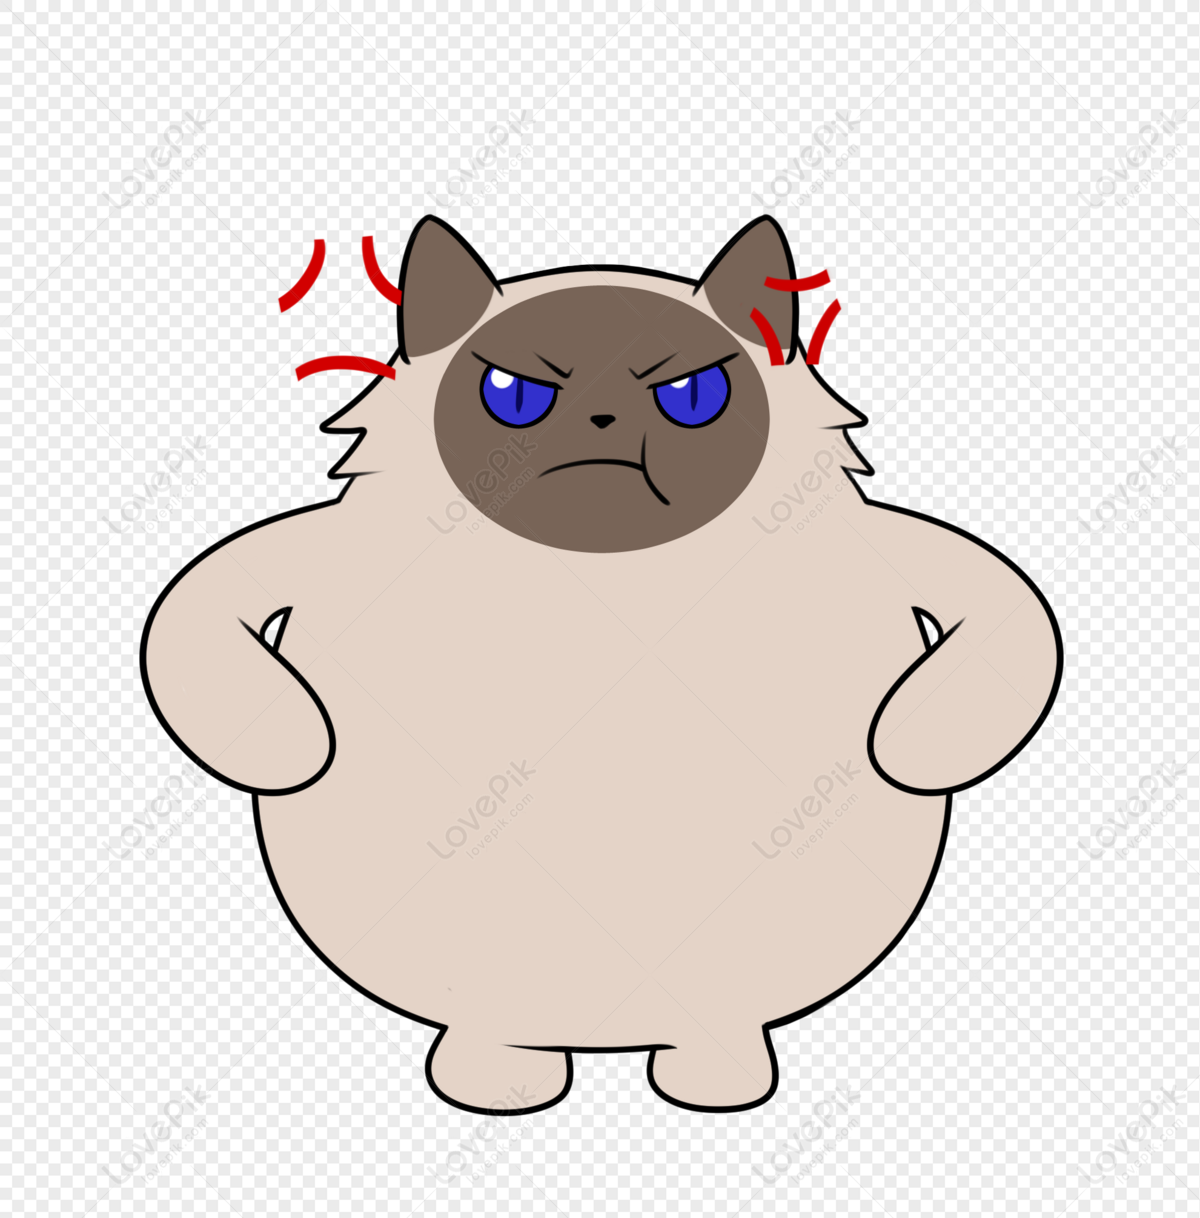 Cartoon angry cat PNG JPG (2102622)